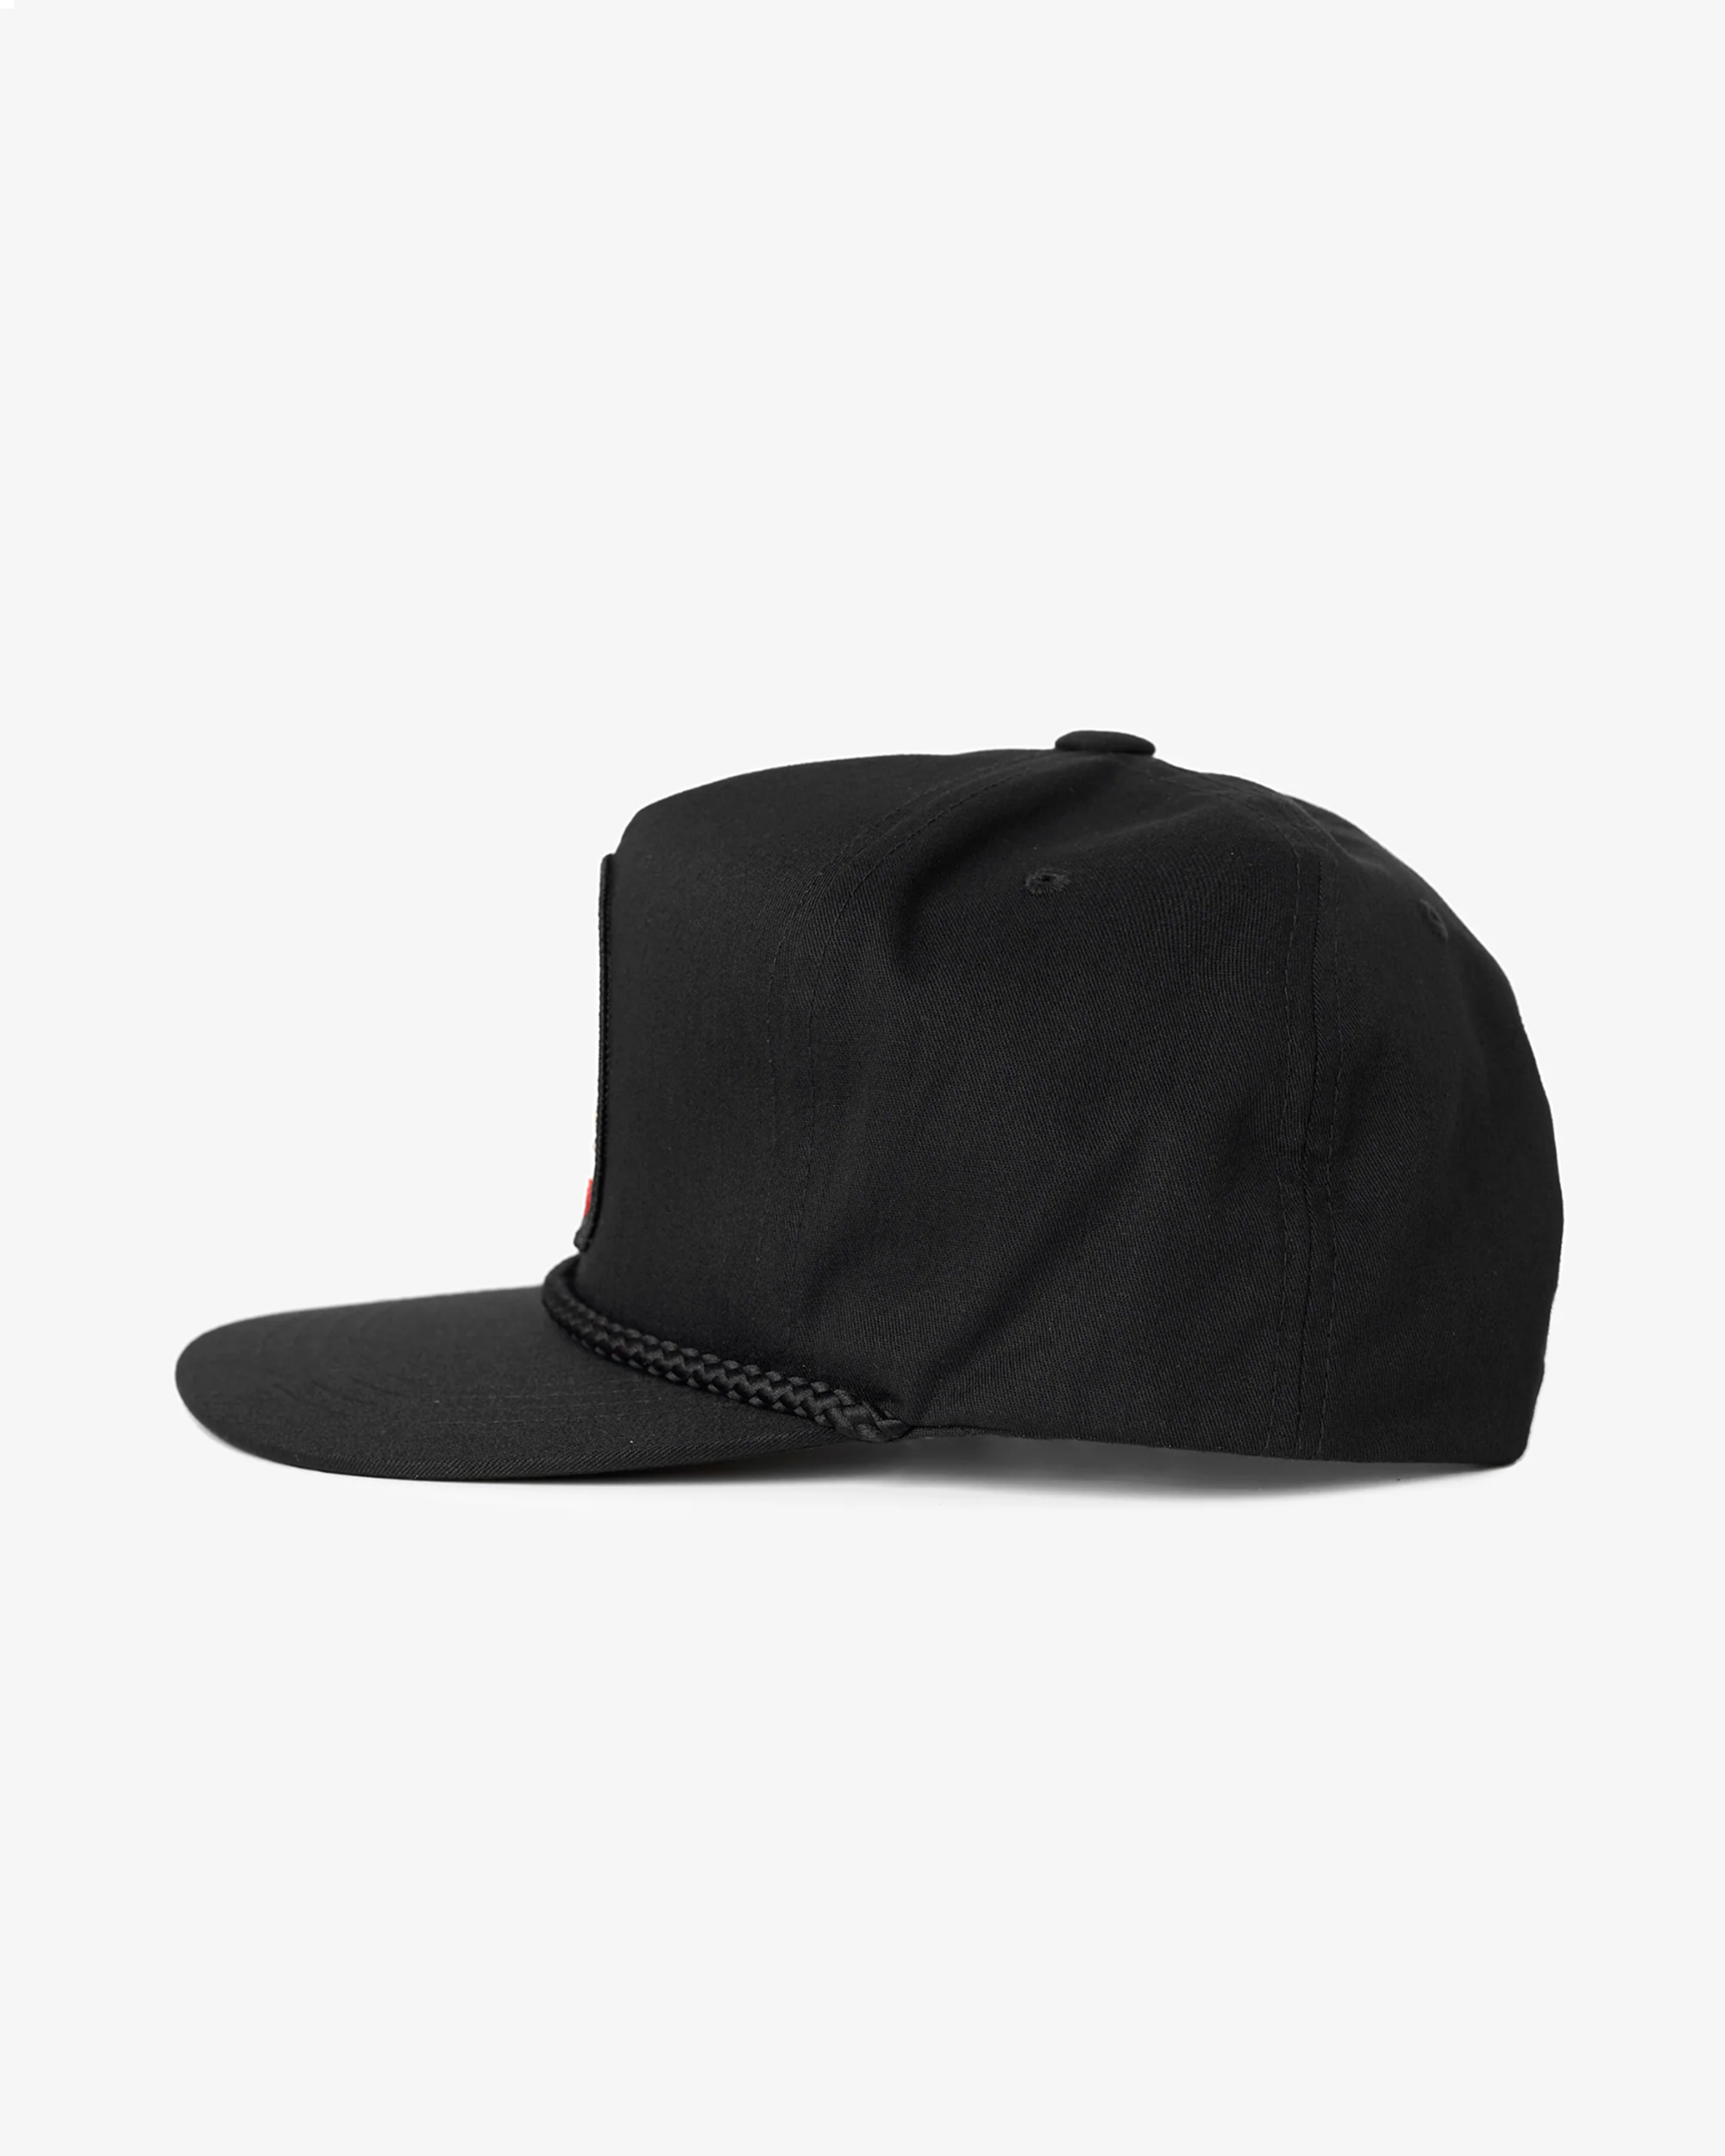 Goodtimes Hat | Black